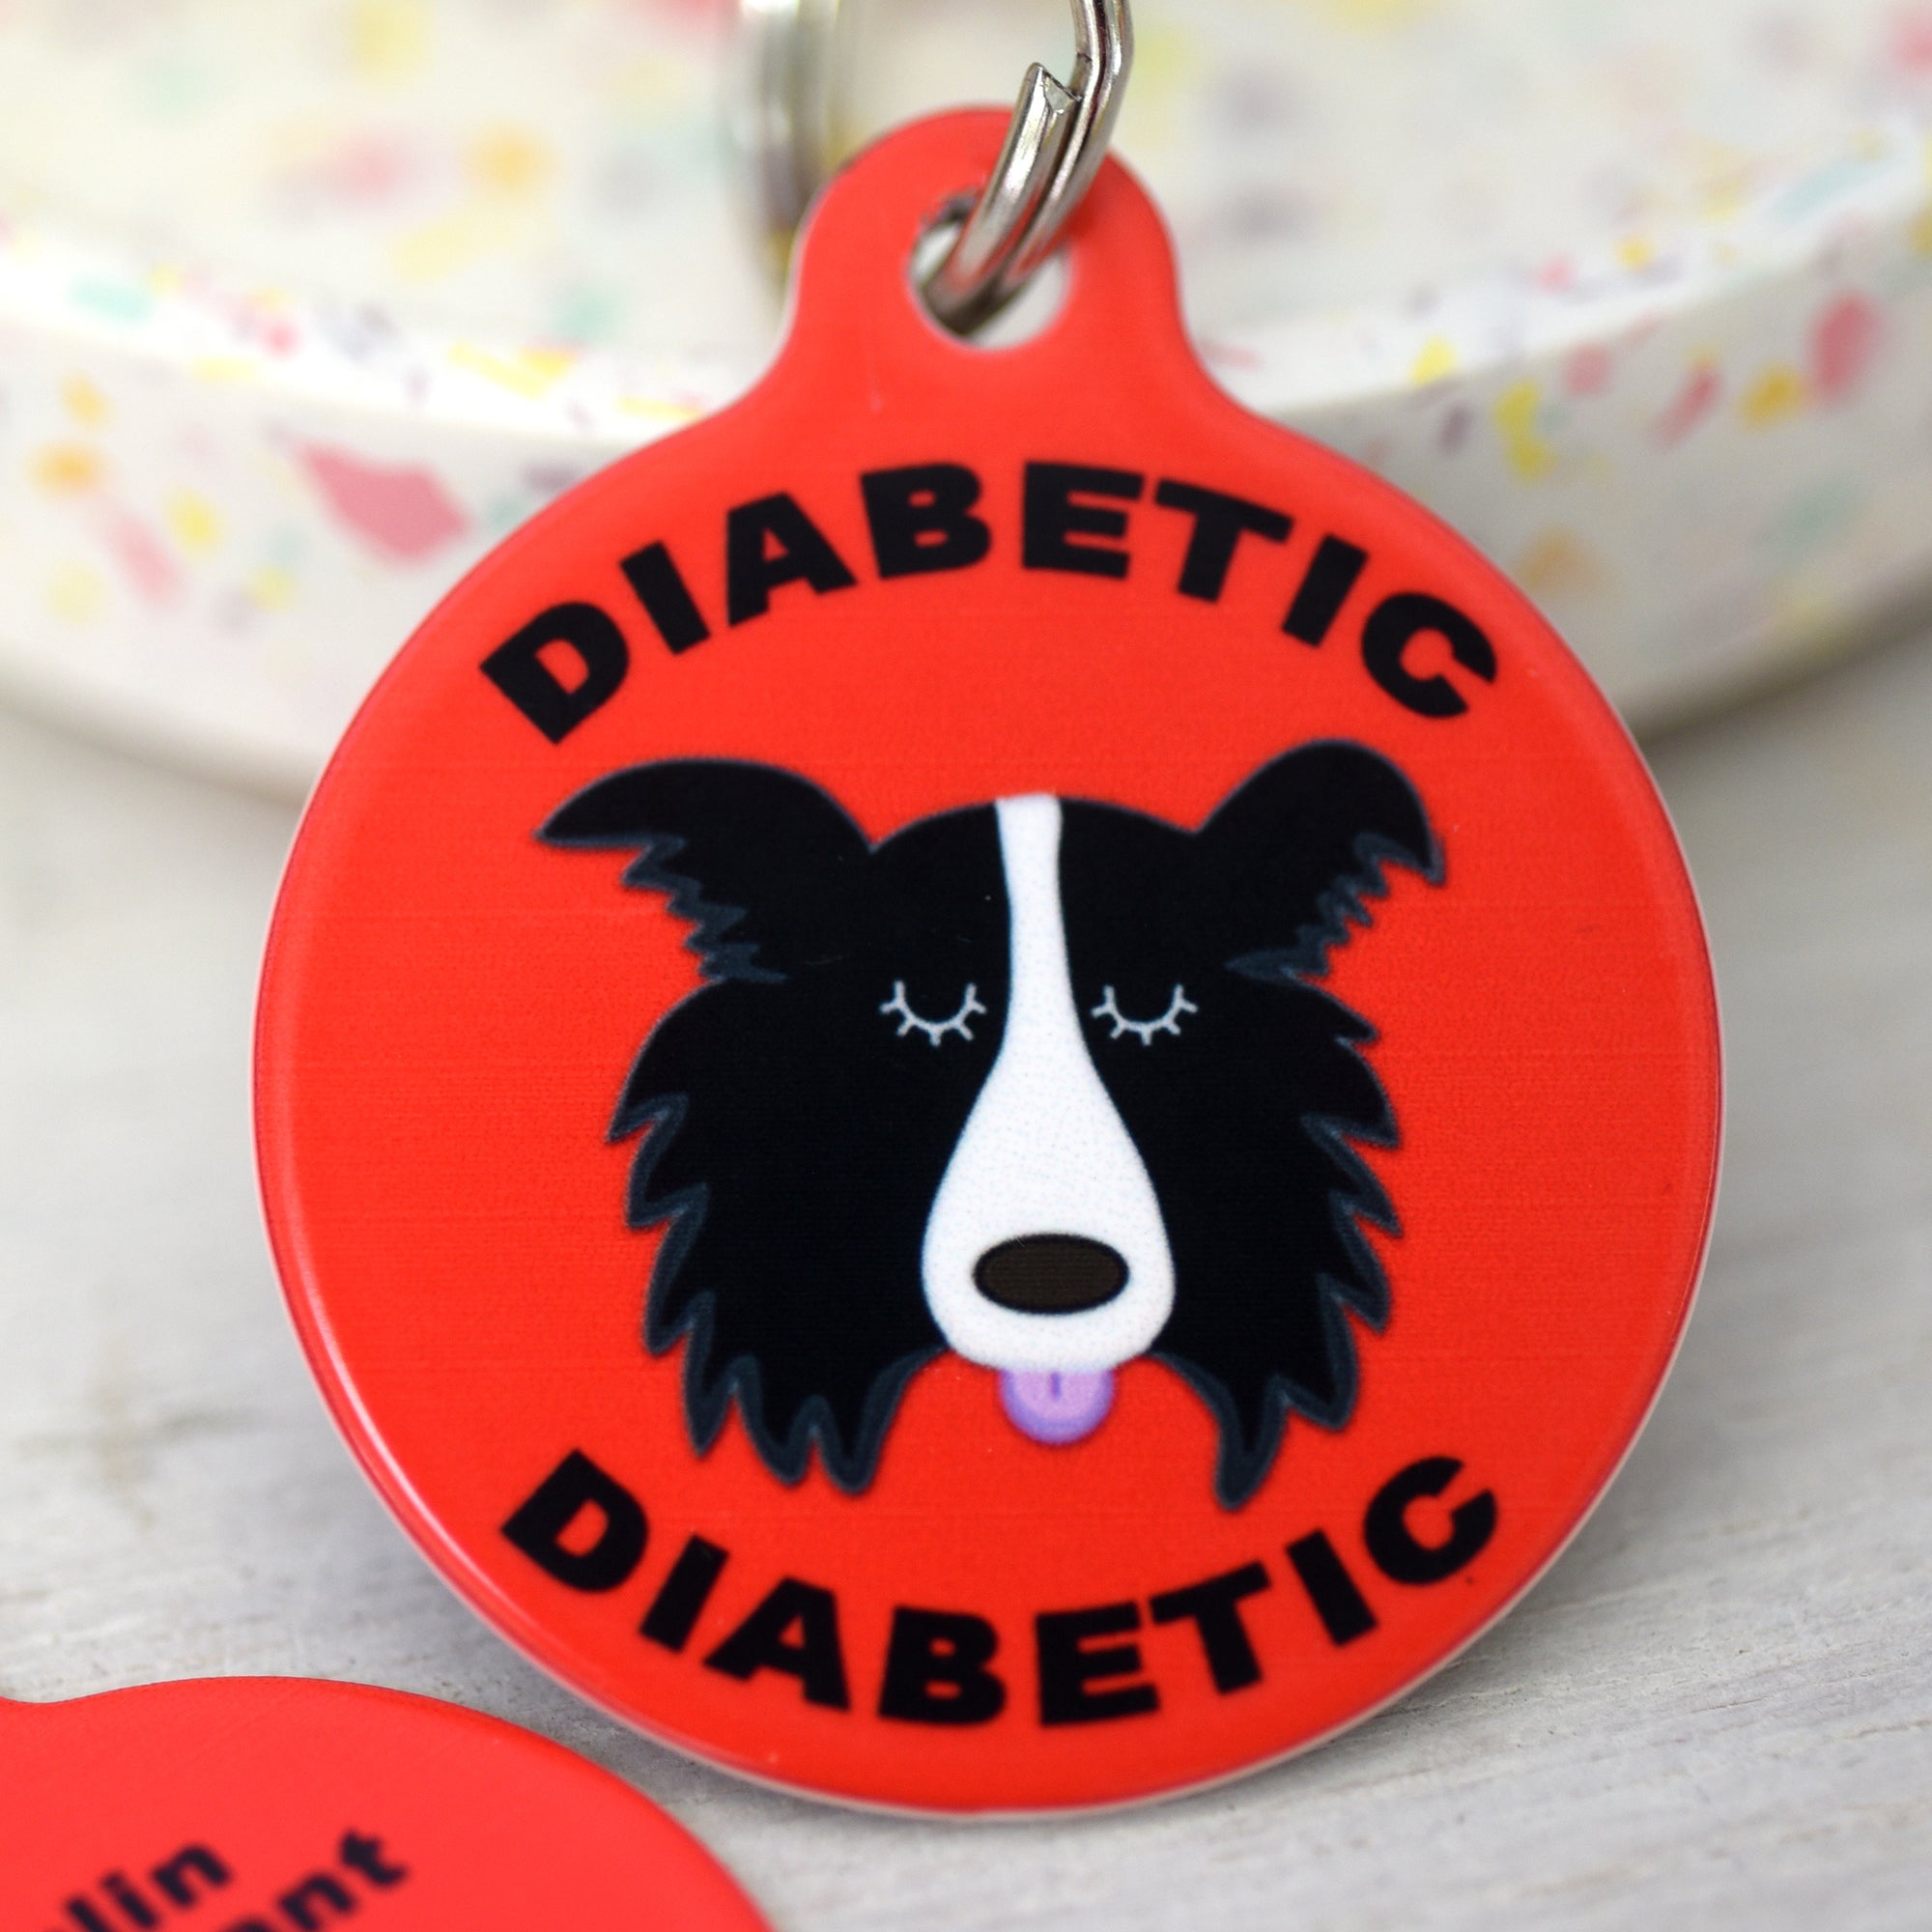 Dog Tag Personalised - Diabetic